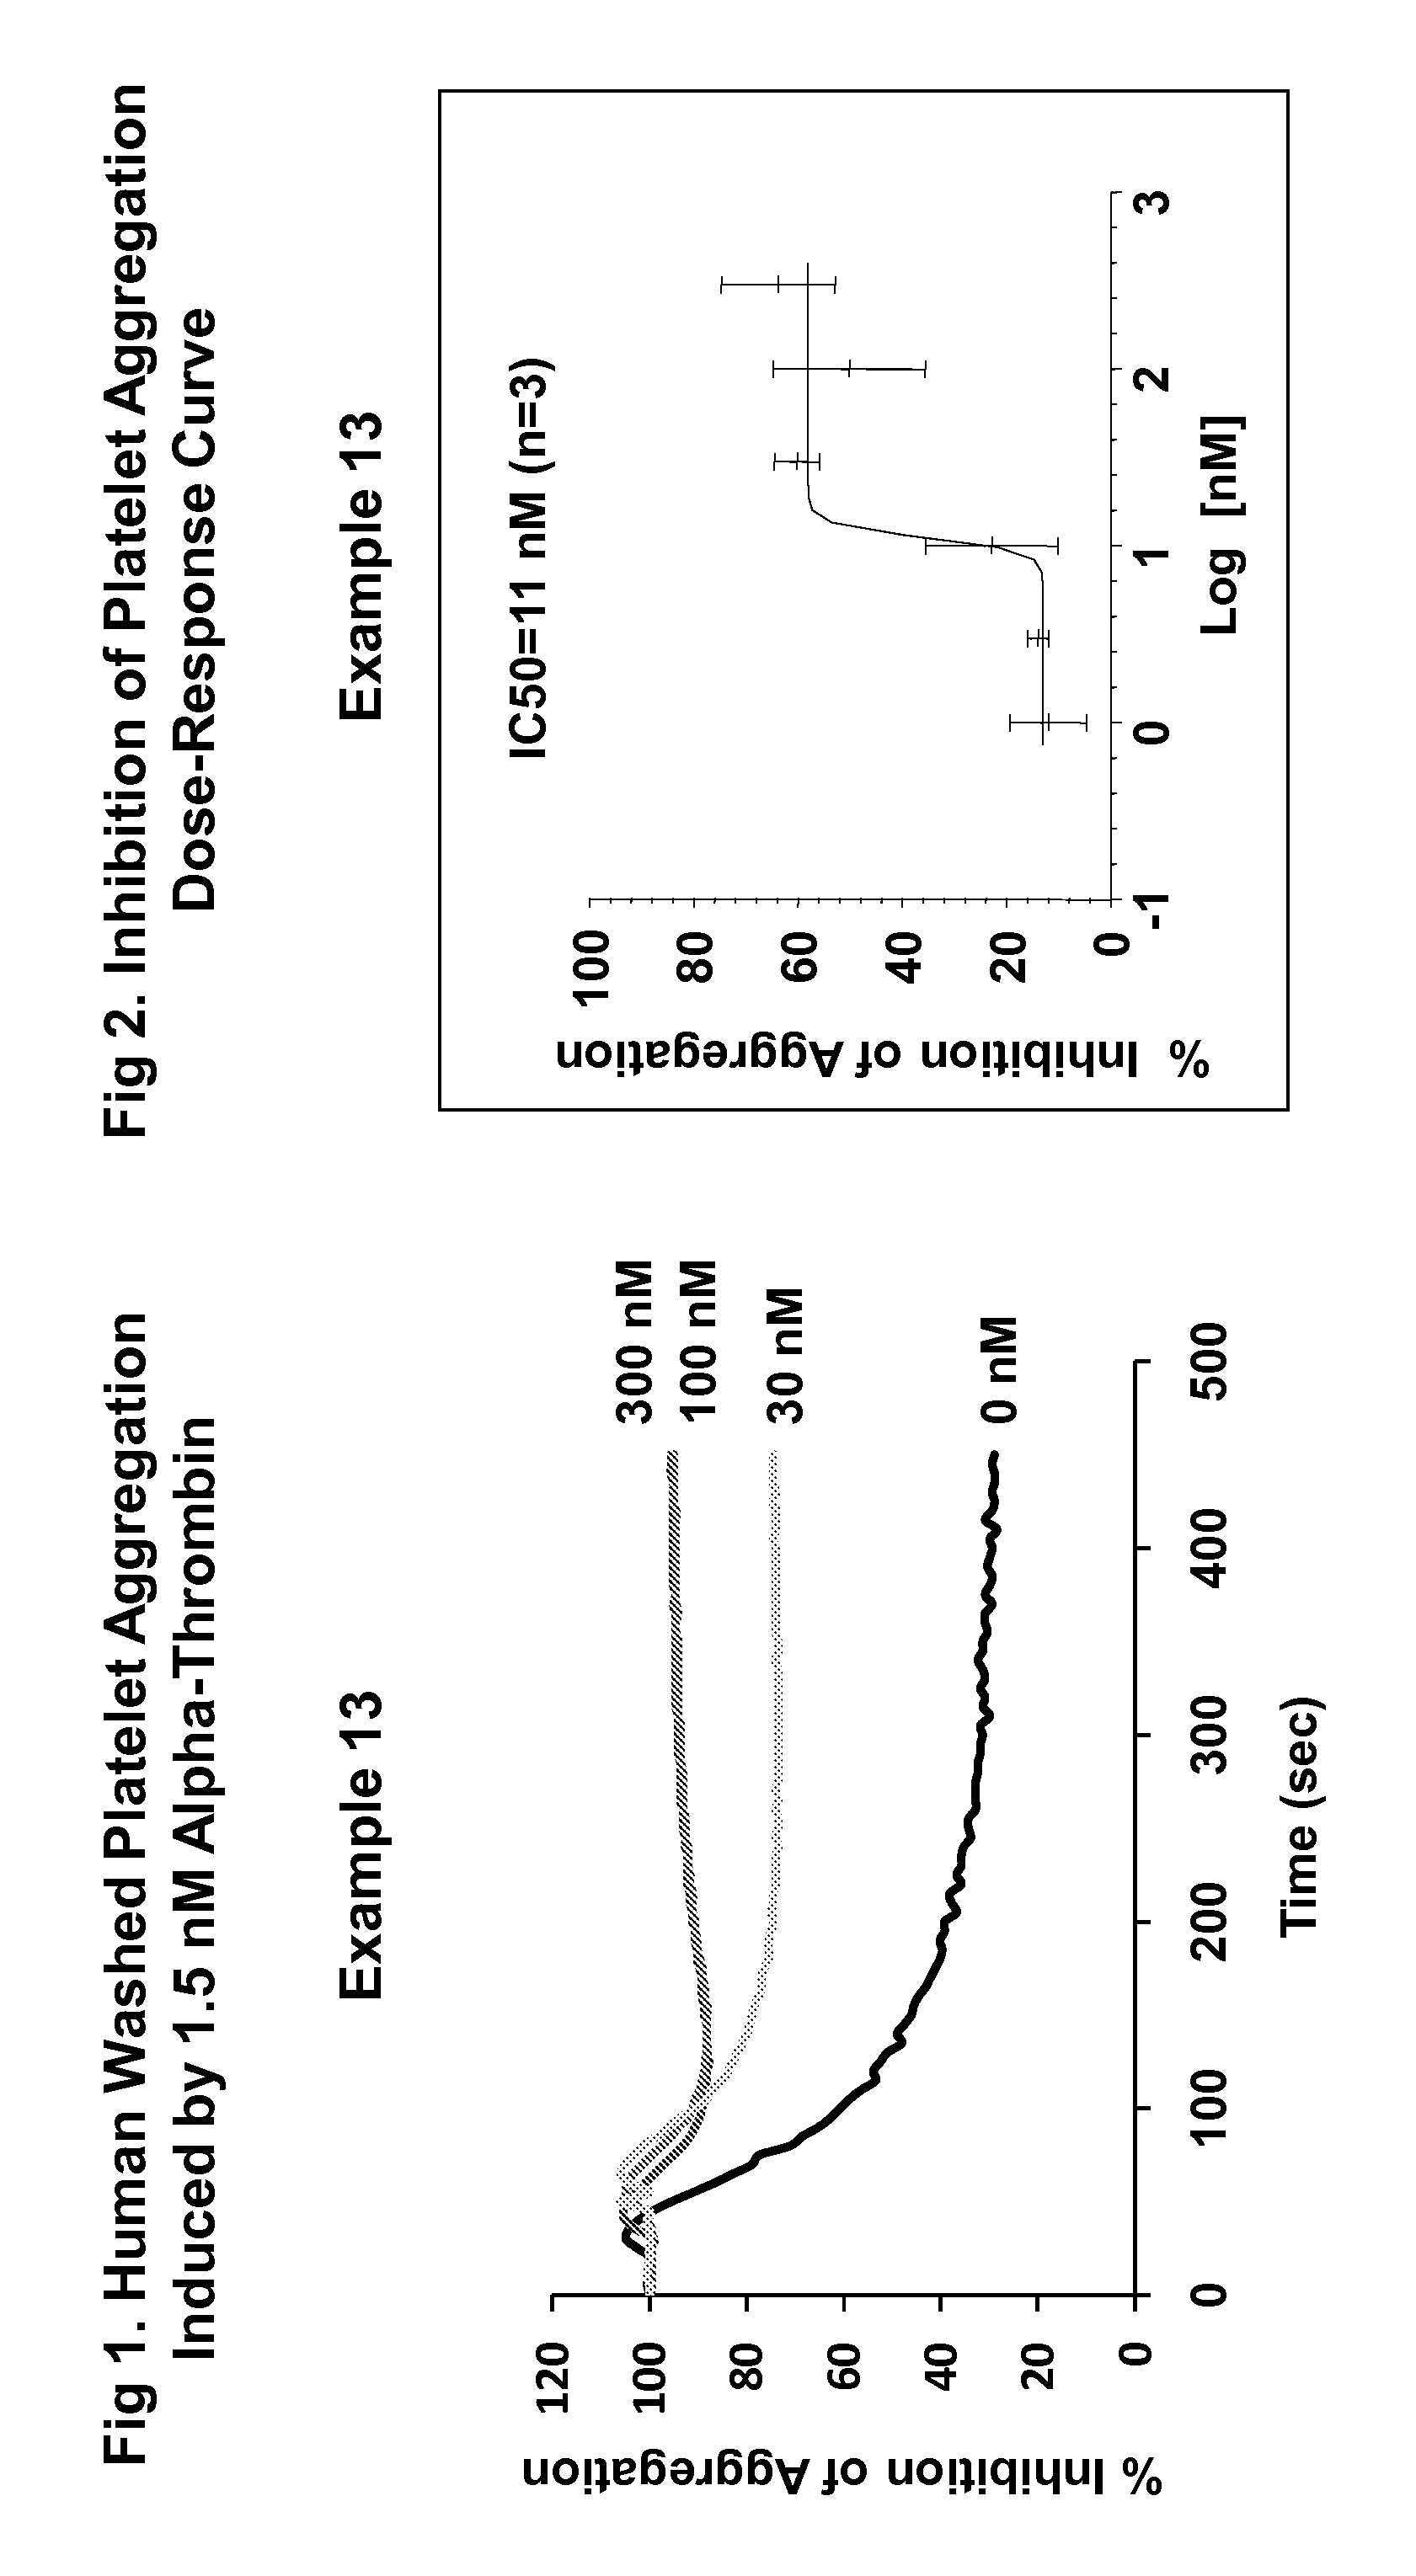 Imidazothiadiazole and imidazopyridazine derivatives as protease activated receptor 4 (PAR4) inhibitors for treating platelet aggregation